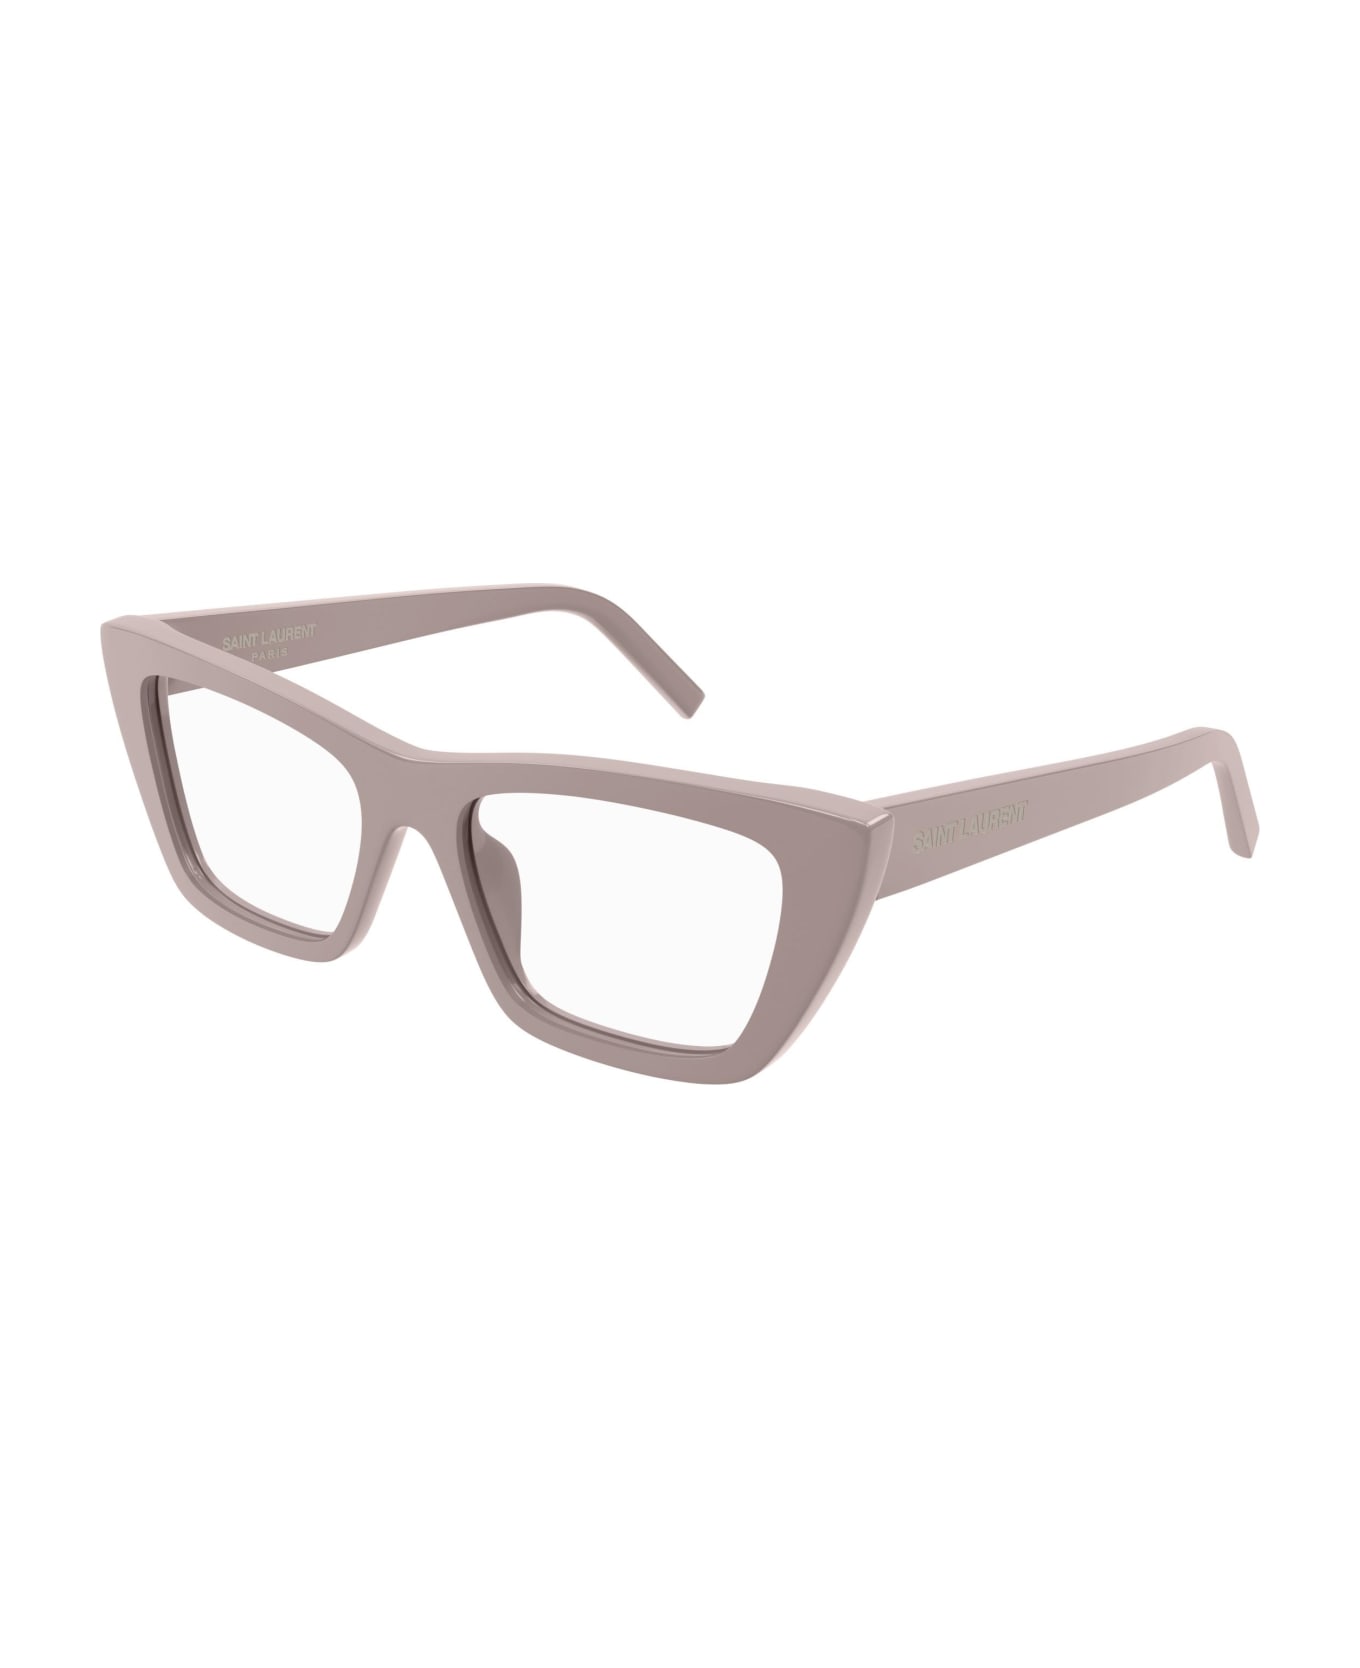 Saint Laurent Eyewear Glasses - Rosa